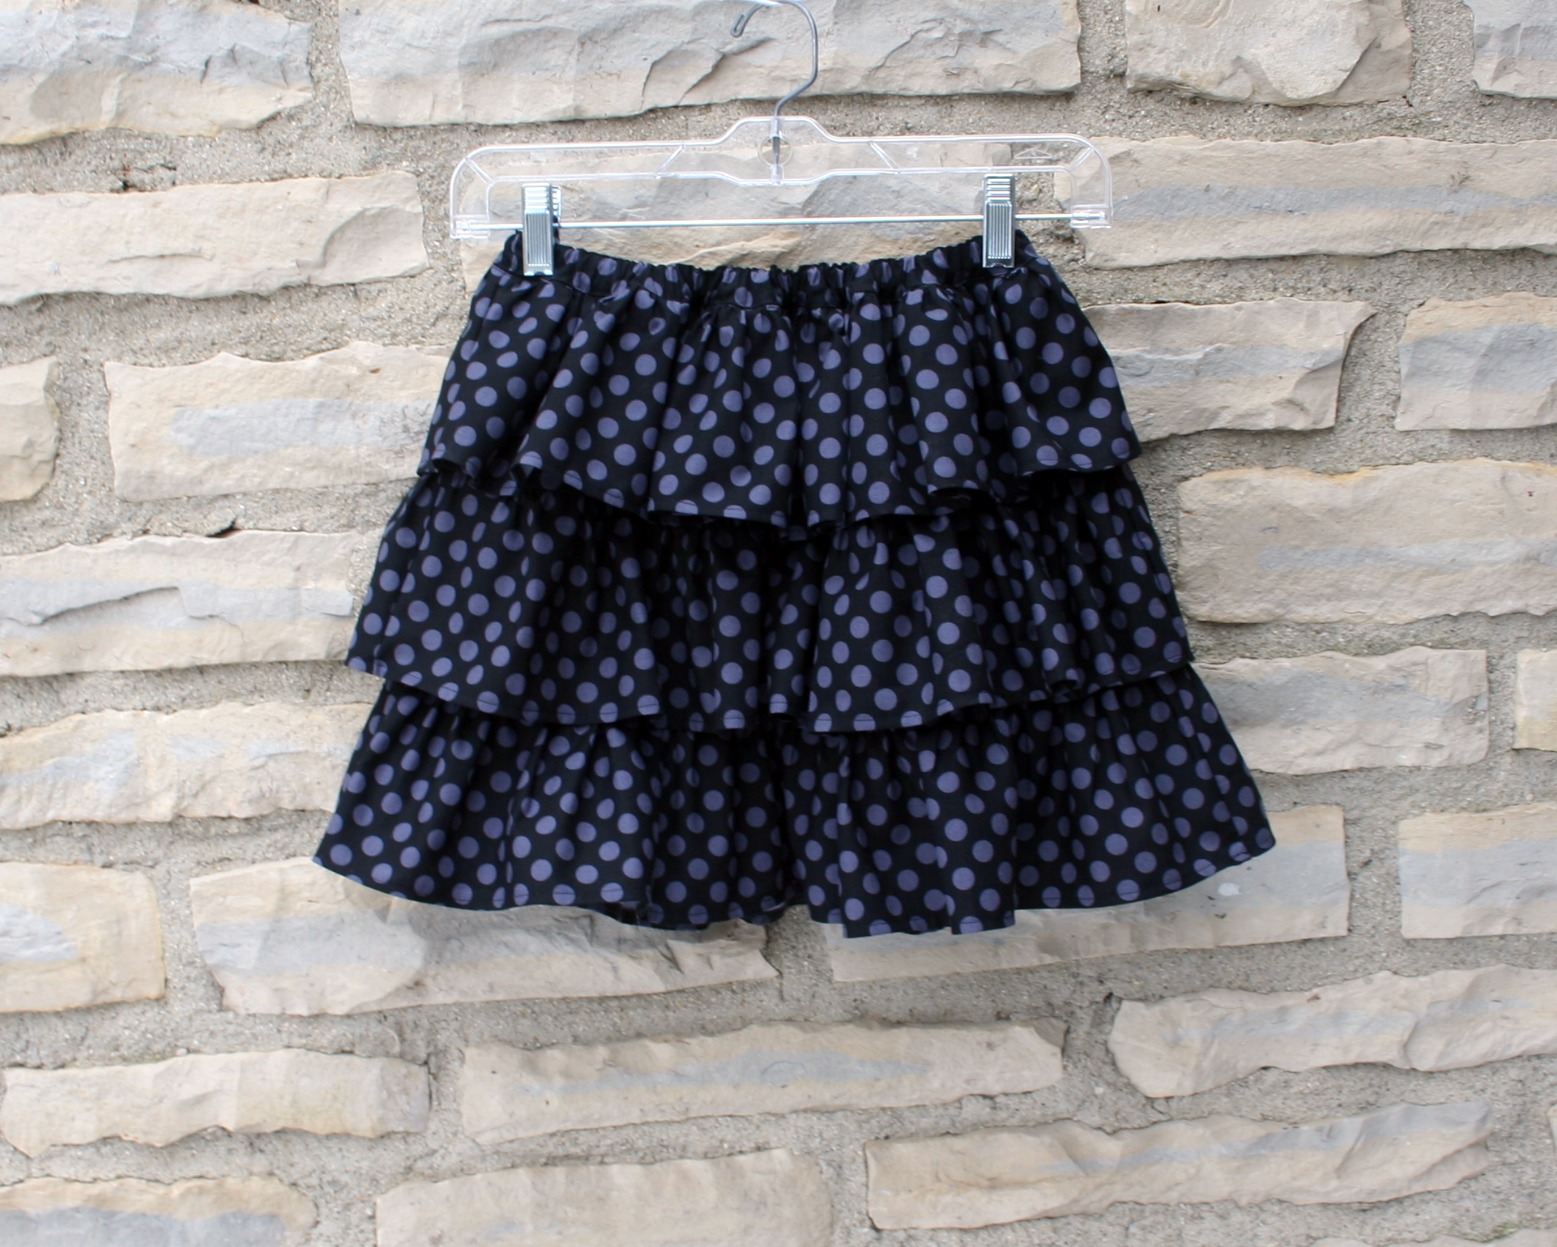 sewing 101: tree skirt | Design*Sponge